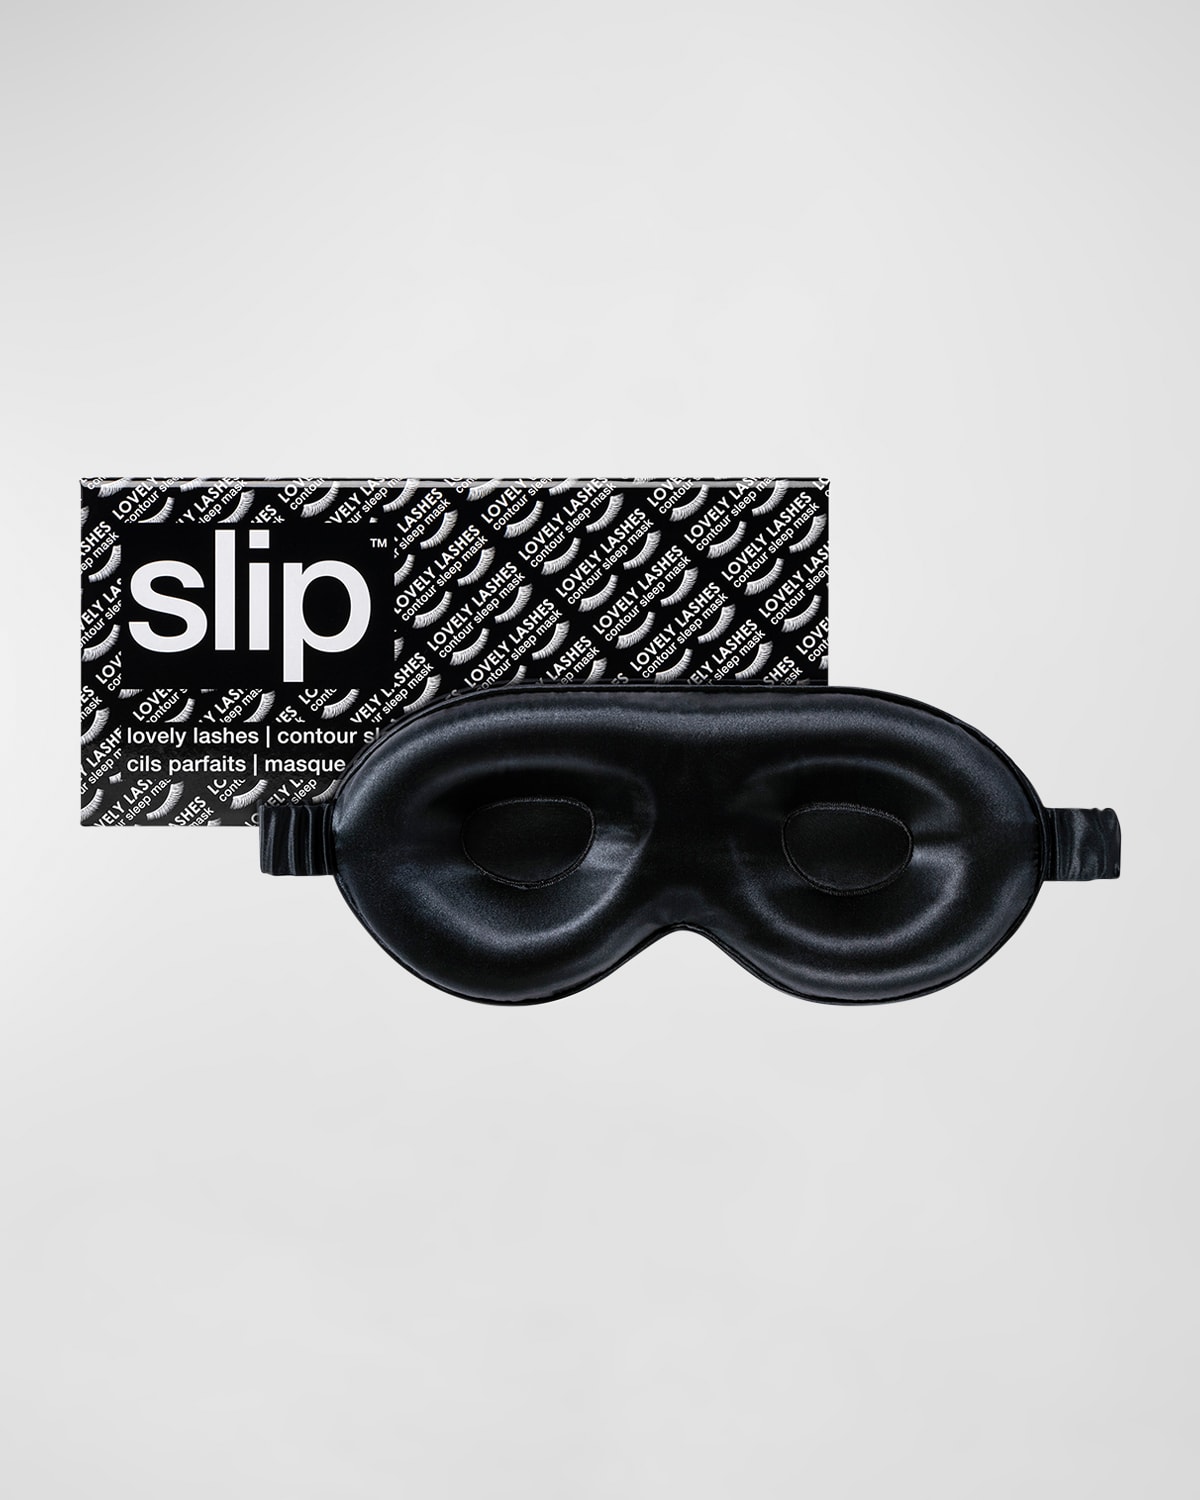 Pure Silk Contour Sleep Mask